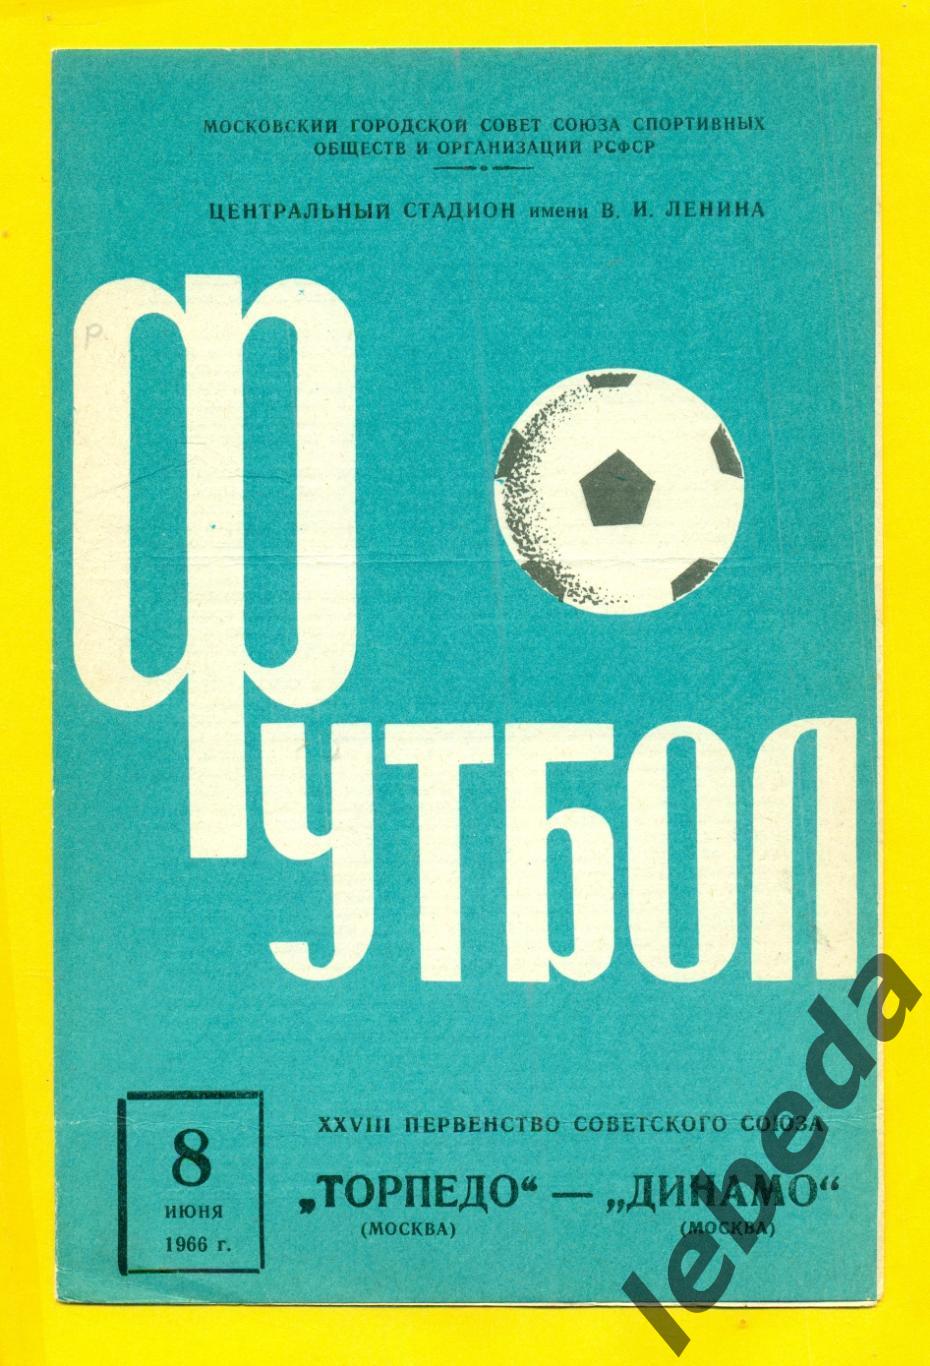 Торпедо Москва - Динамо Москва - 1966 г. (08.06.66.)